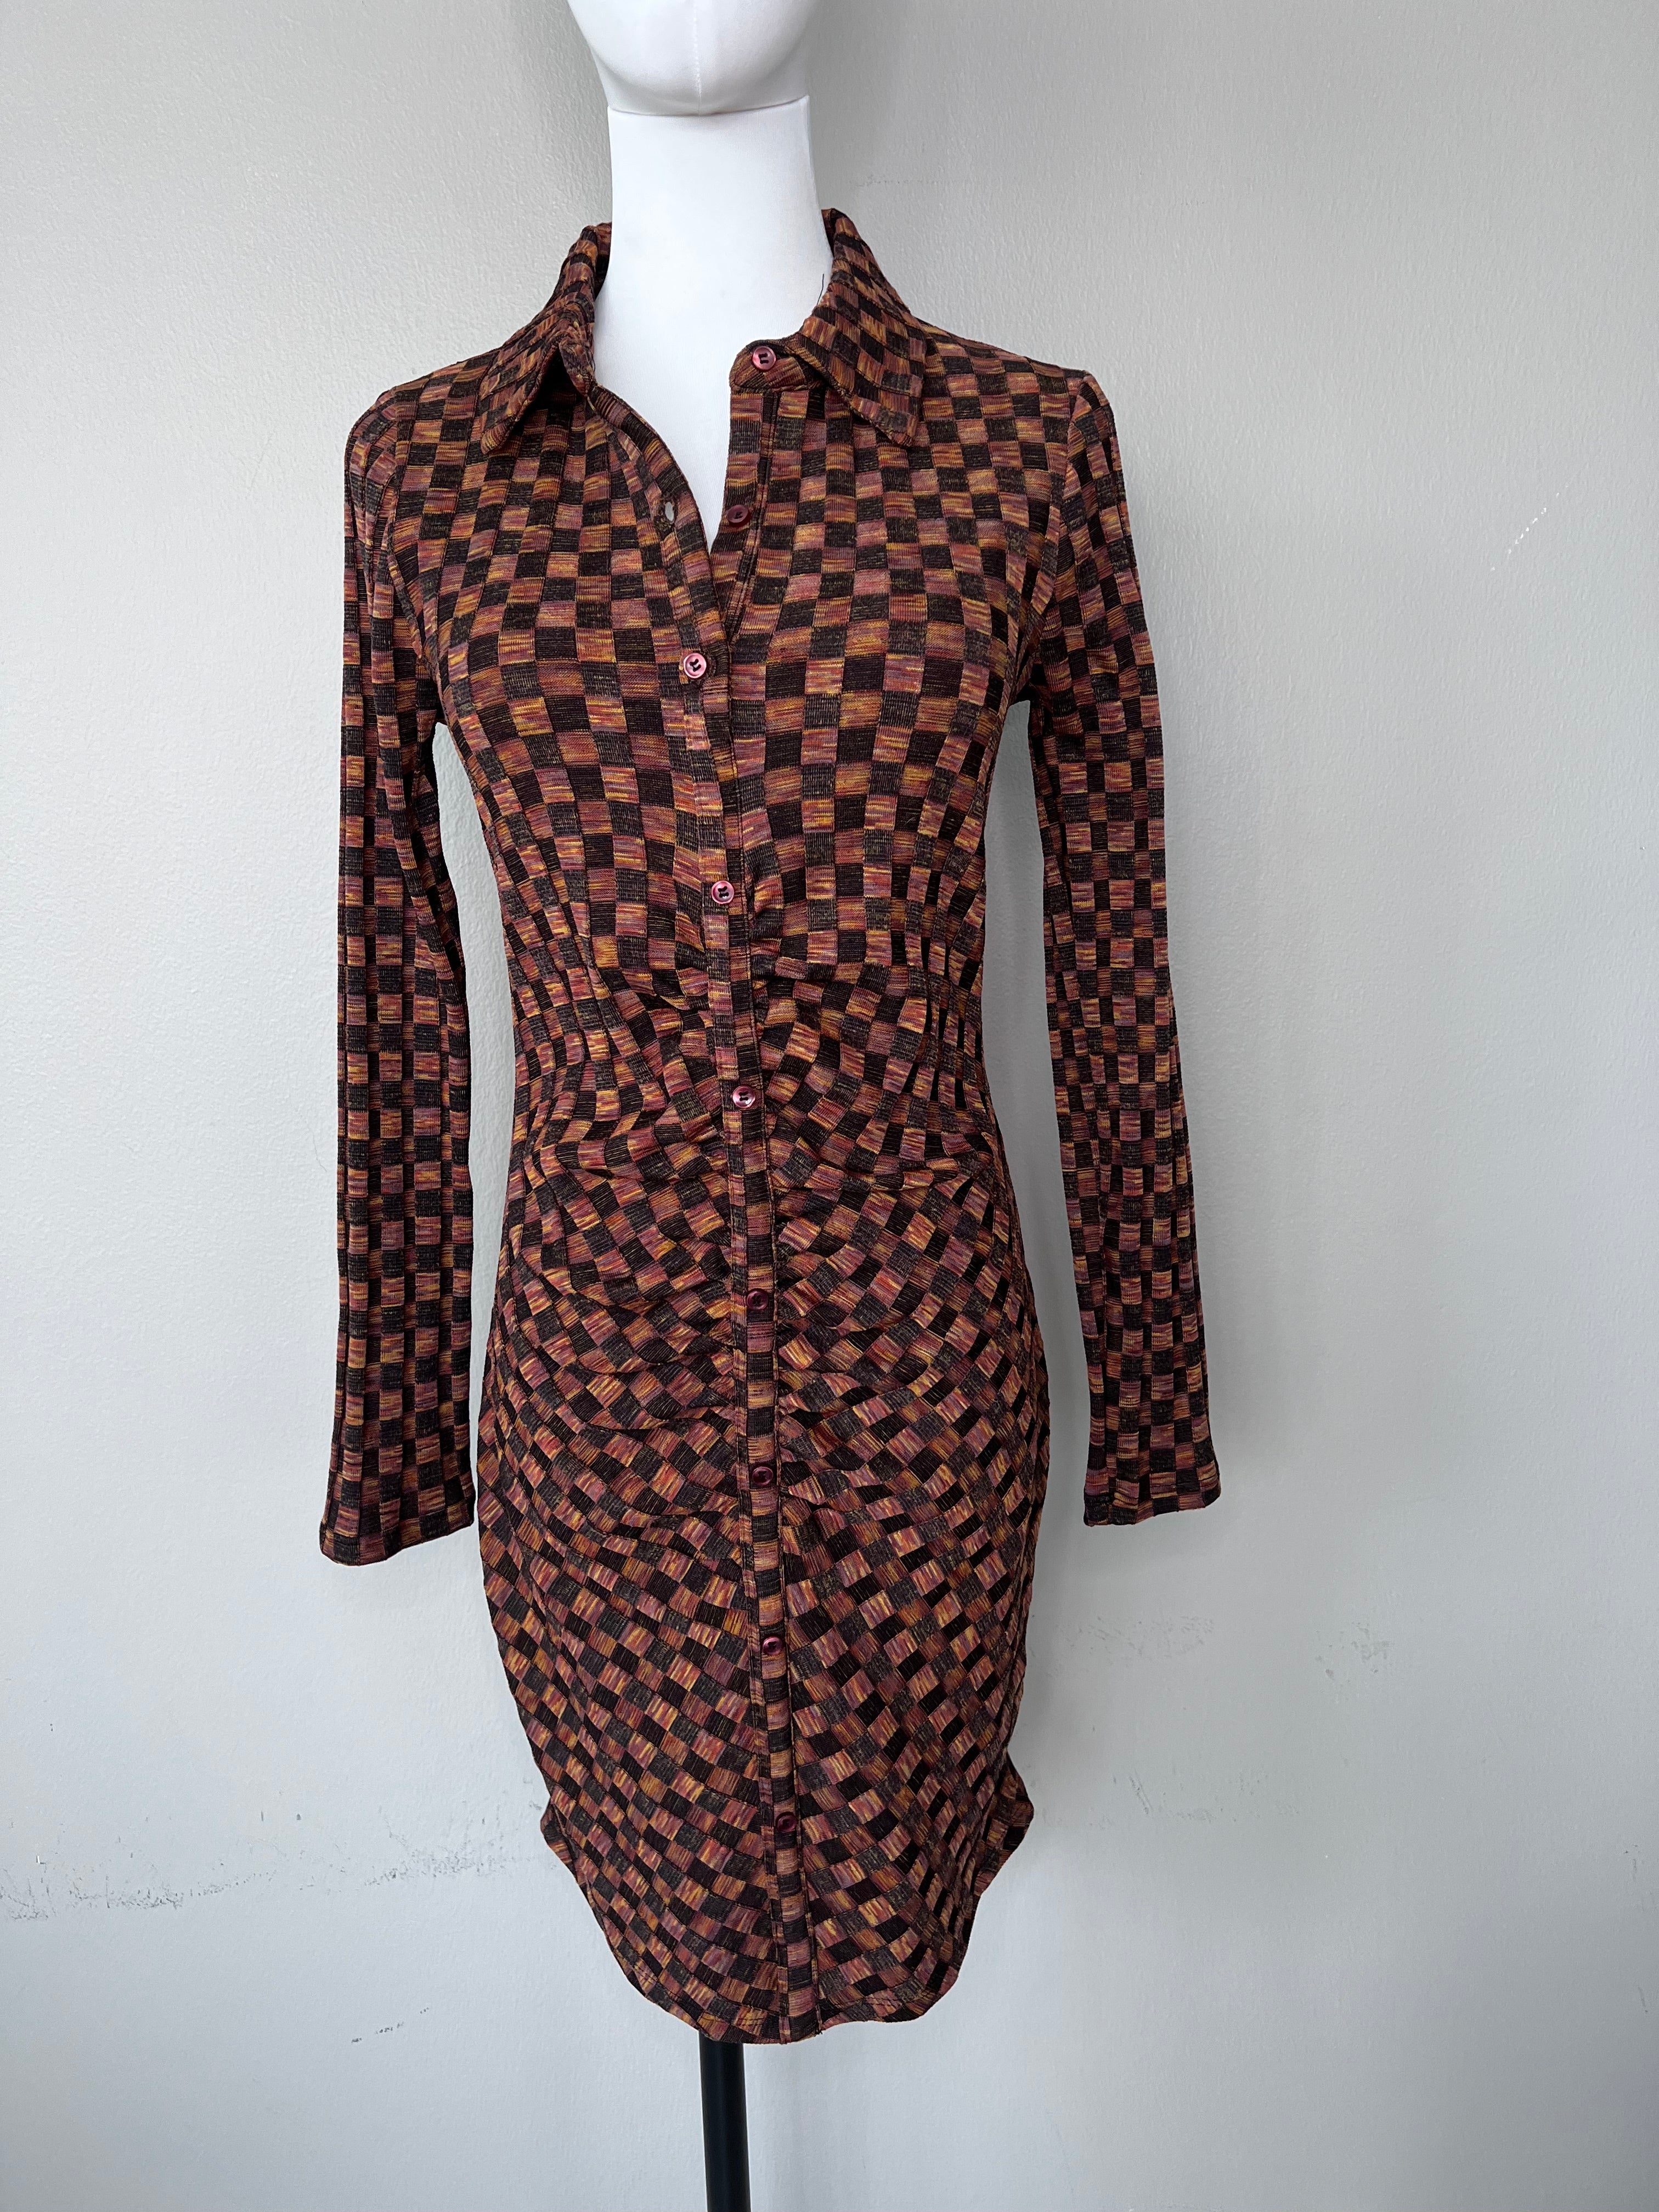 Collared Brown and black checkered dress - ZARA